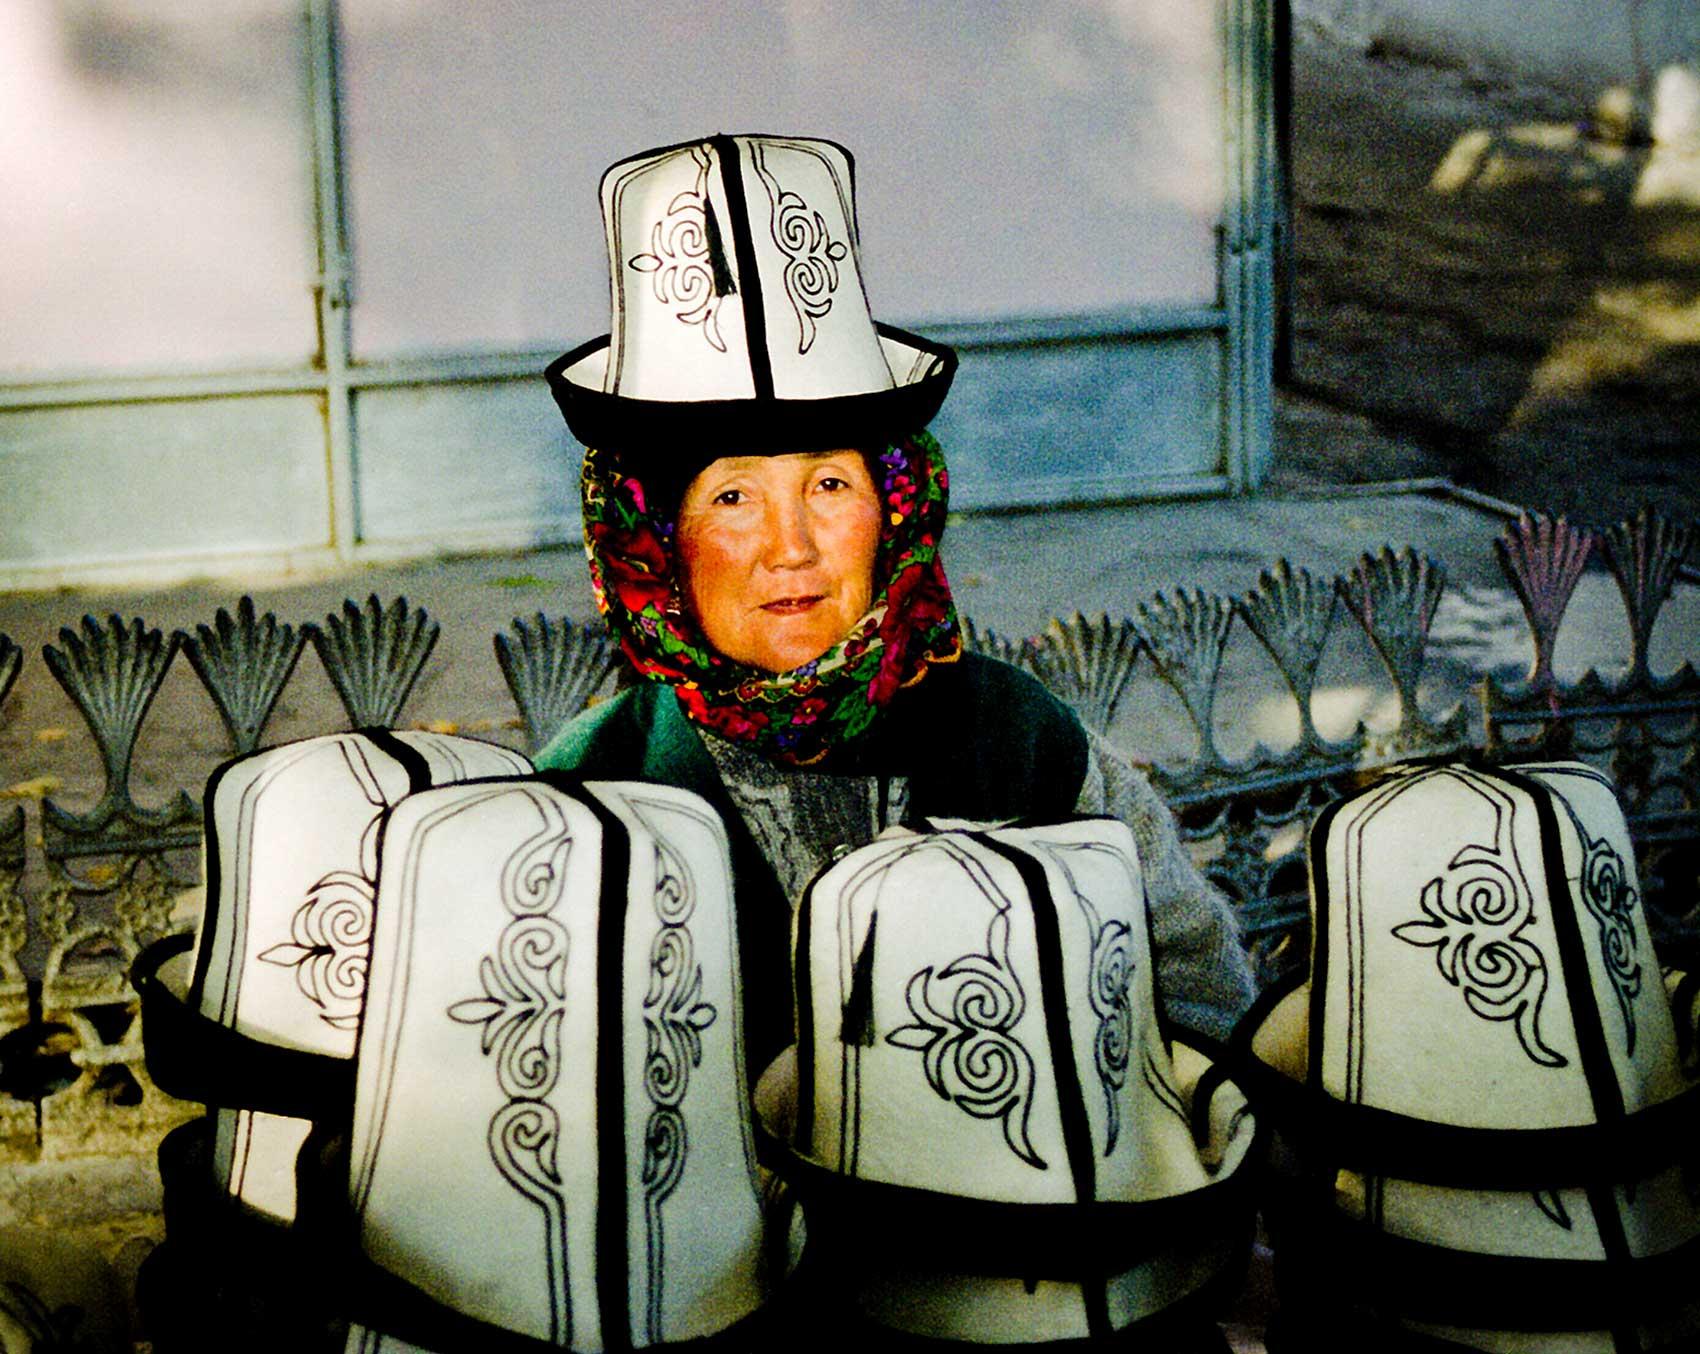 Woman selling hats